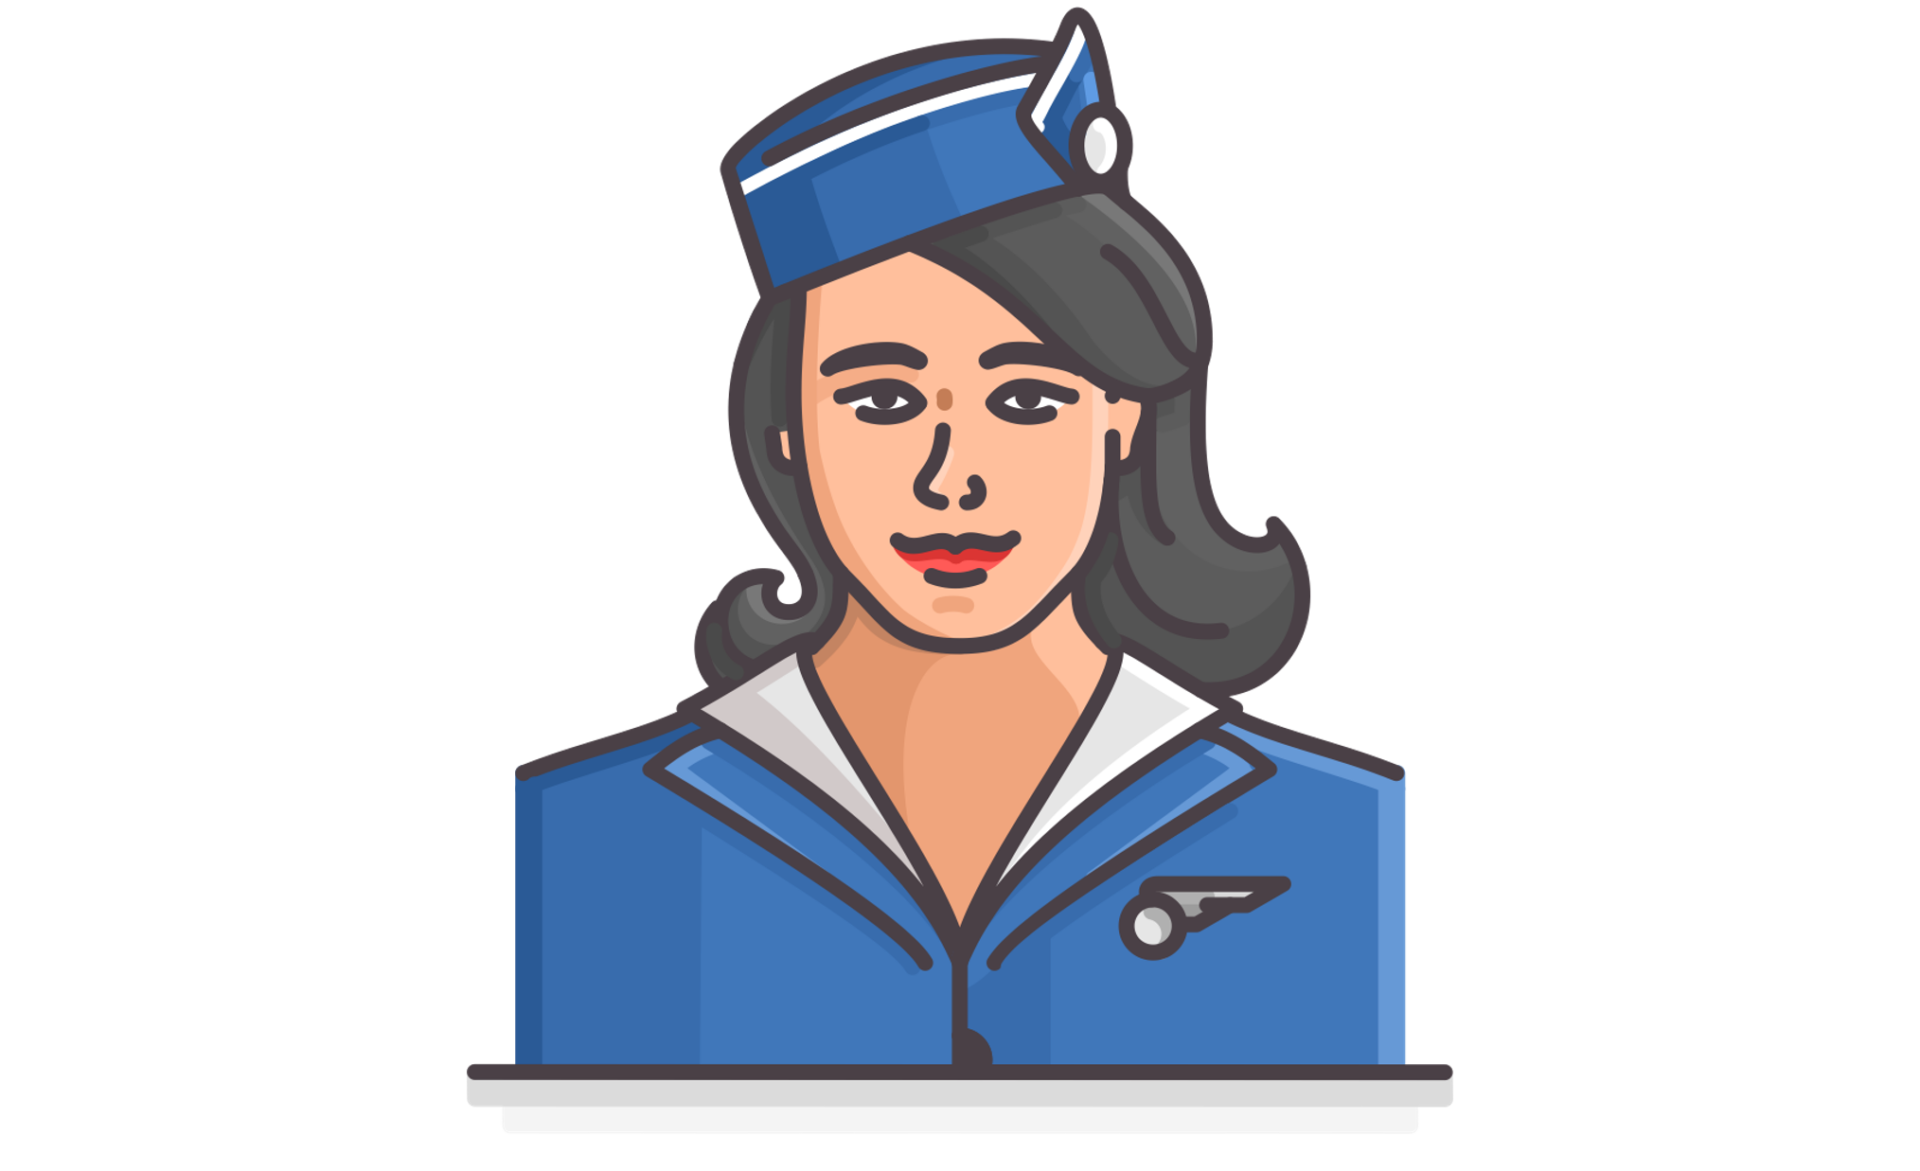 Pan Am stewardess icon